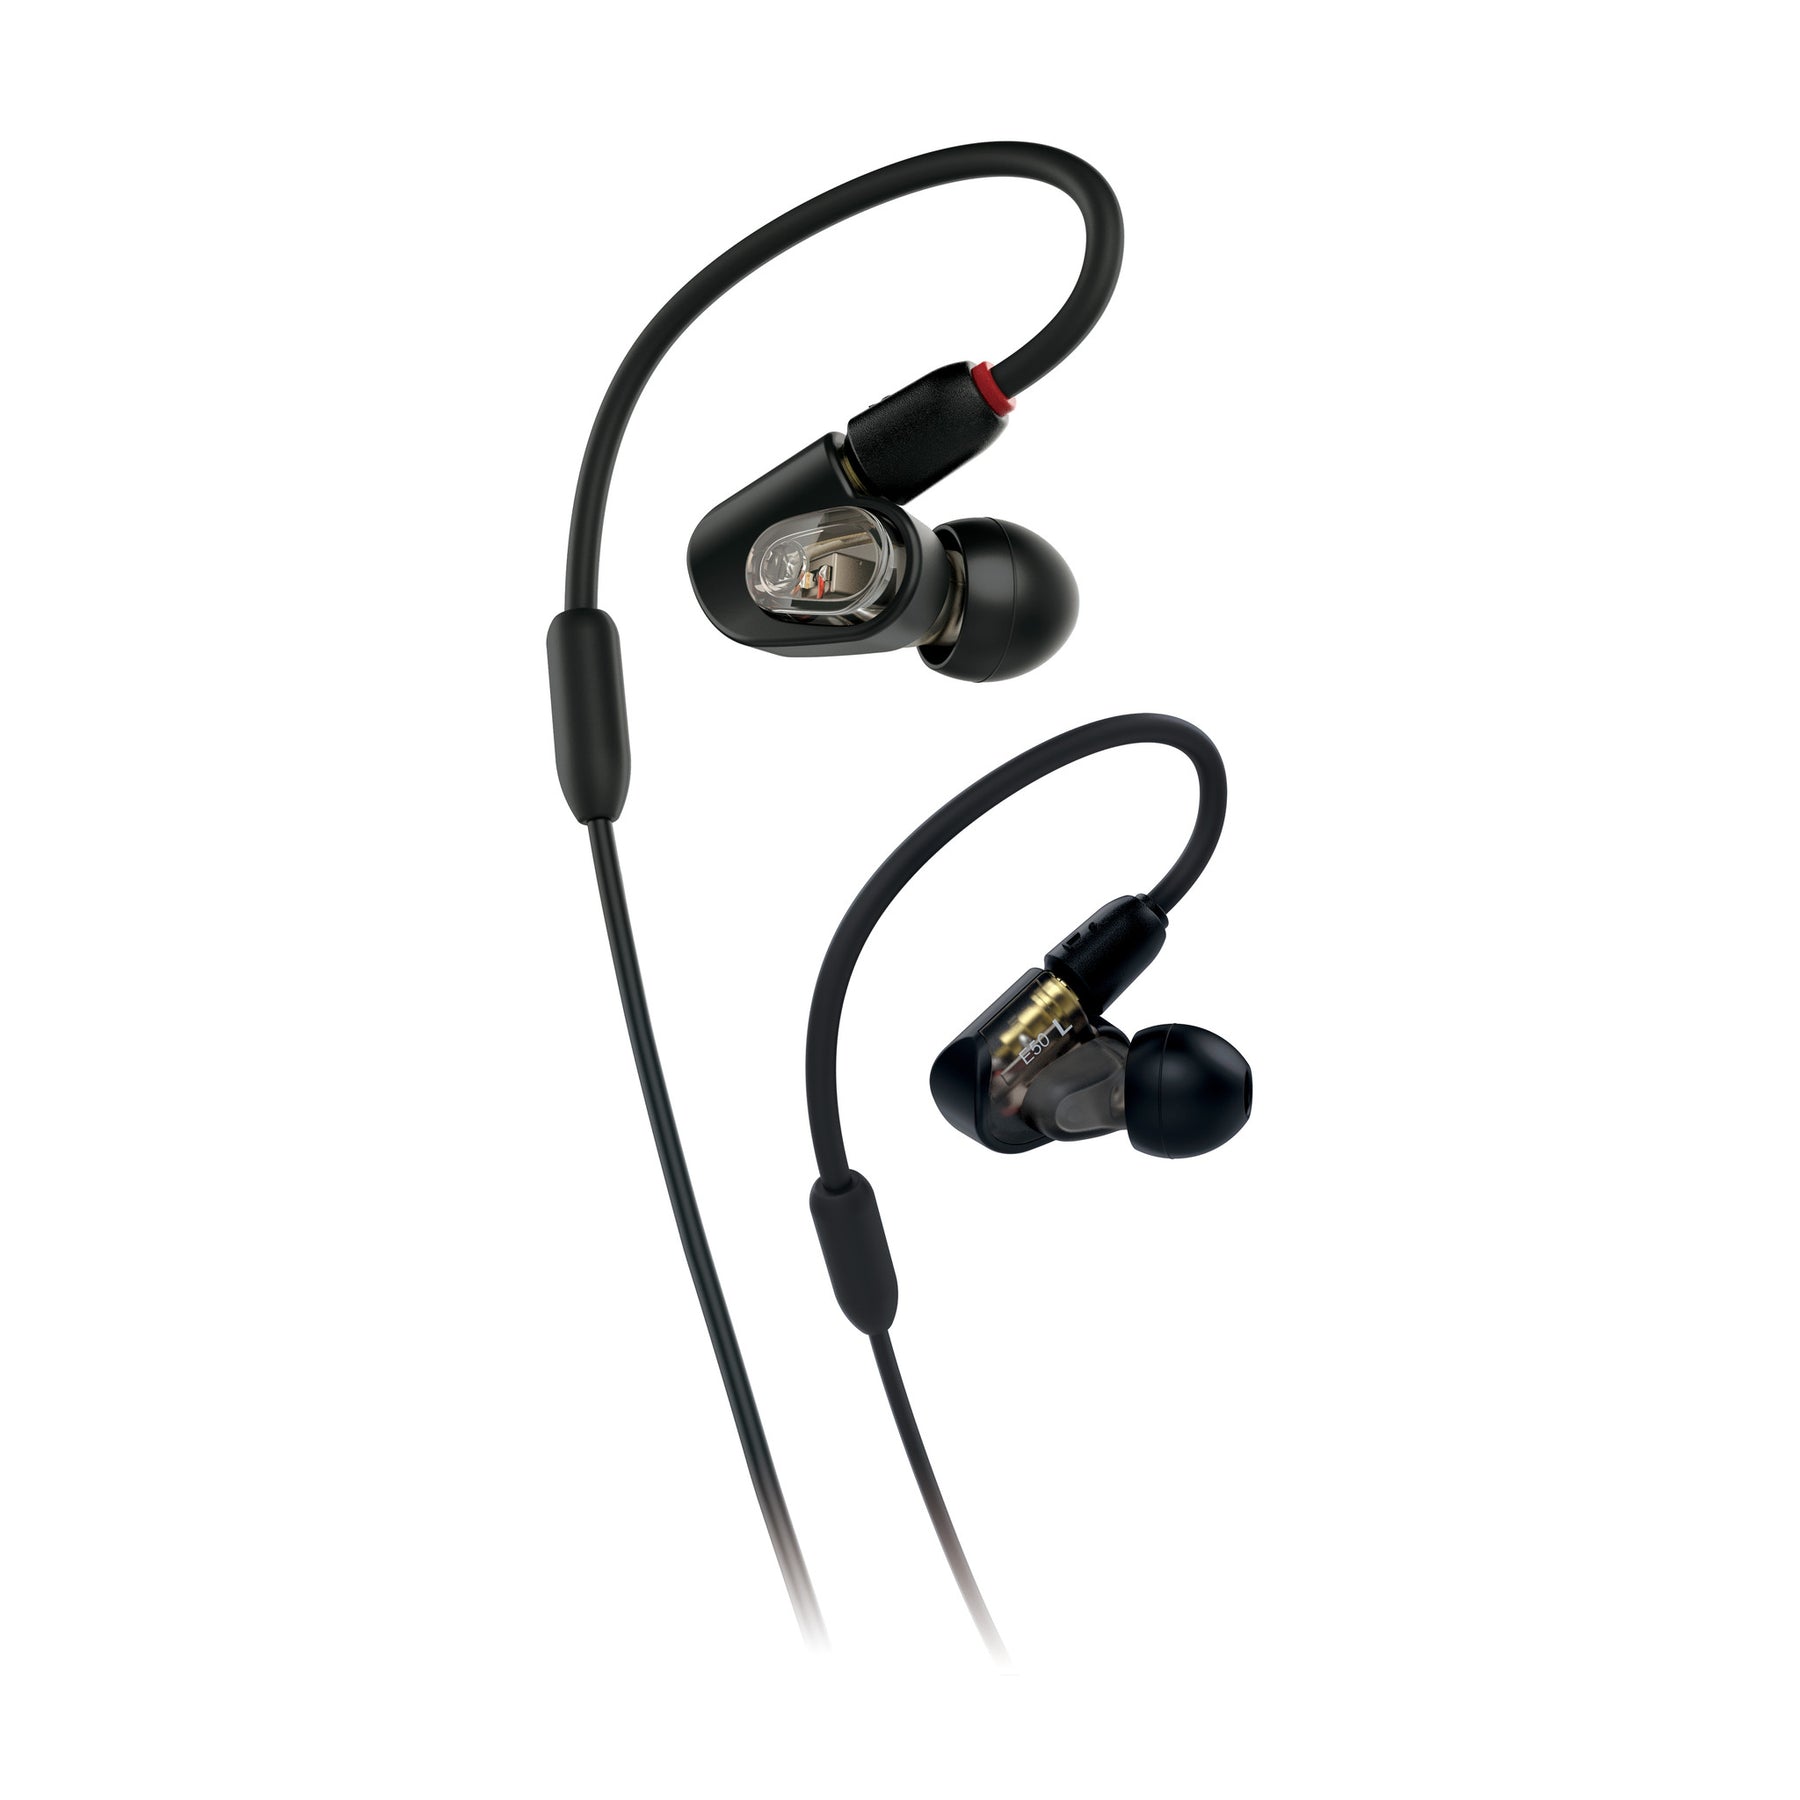 Audio-Technica: ATH-E50 Professional In-Ear Monitor Earphones – TurntableLab.com